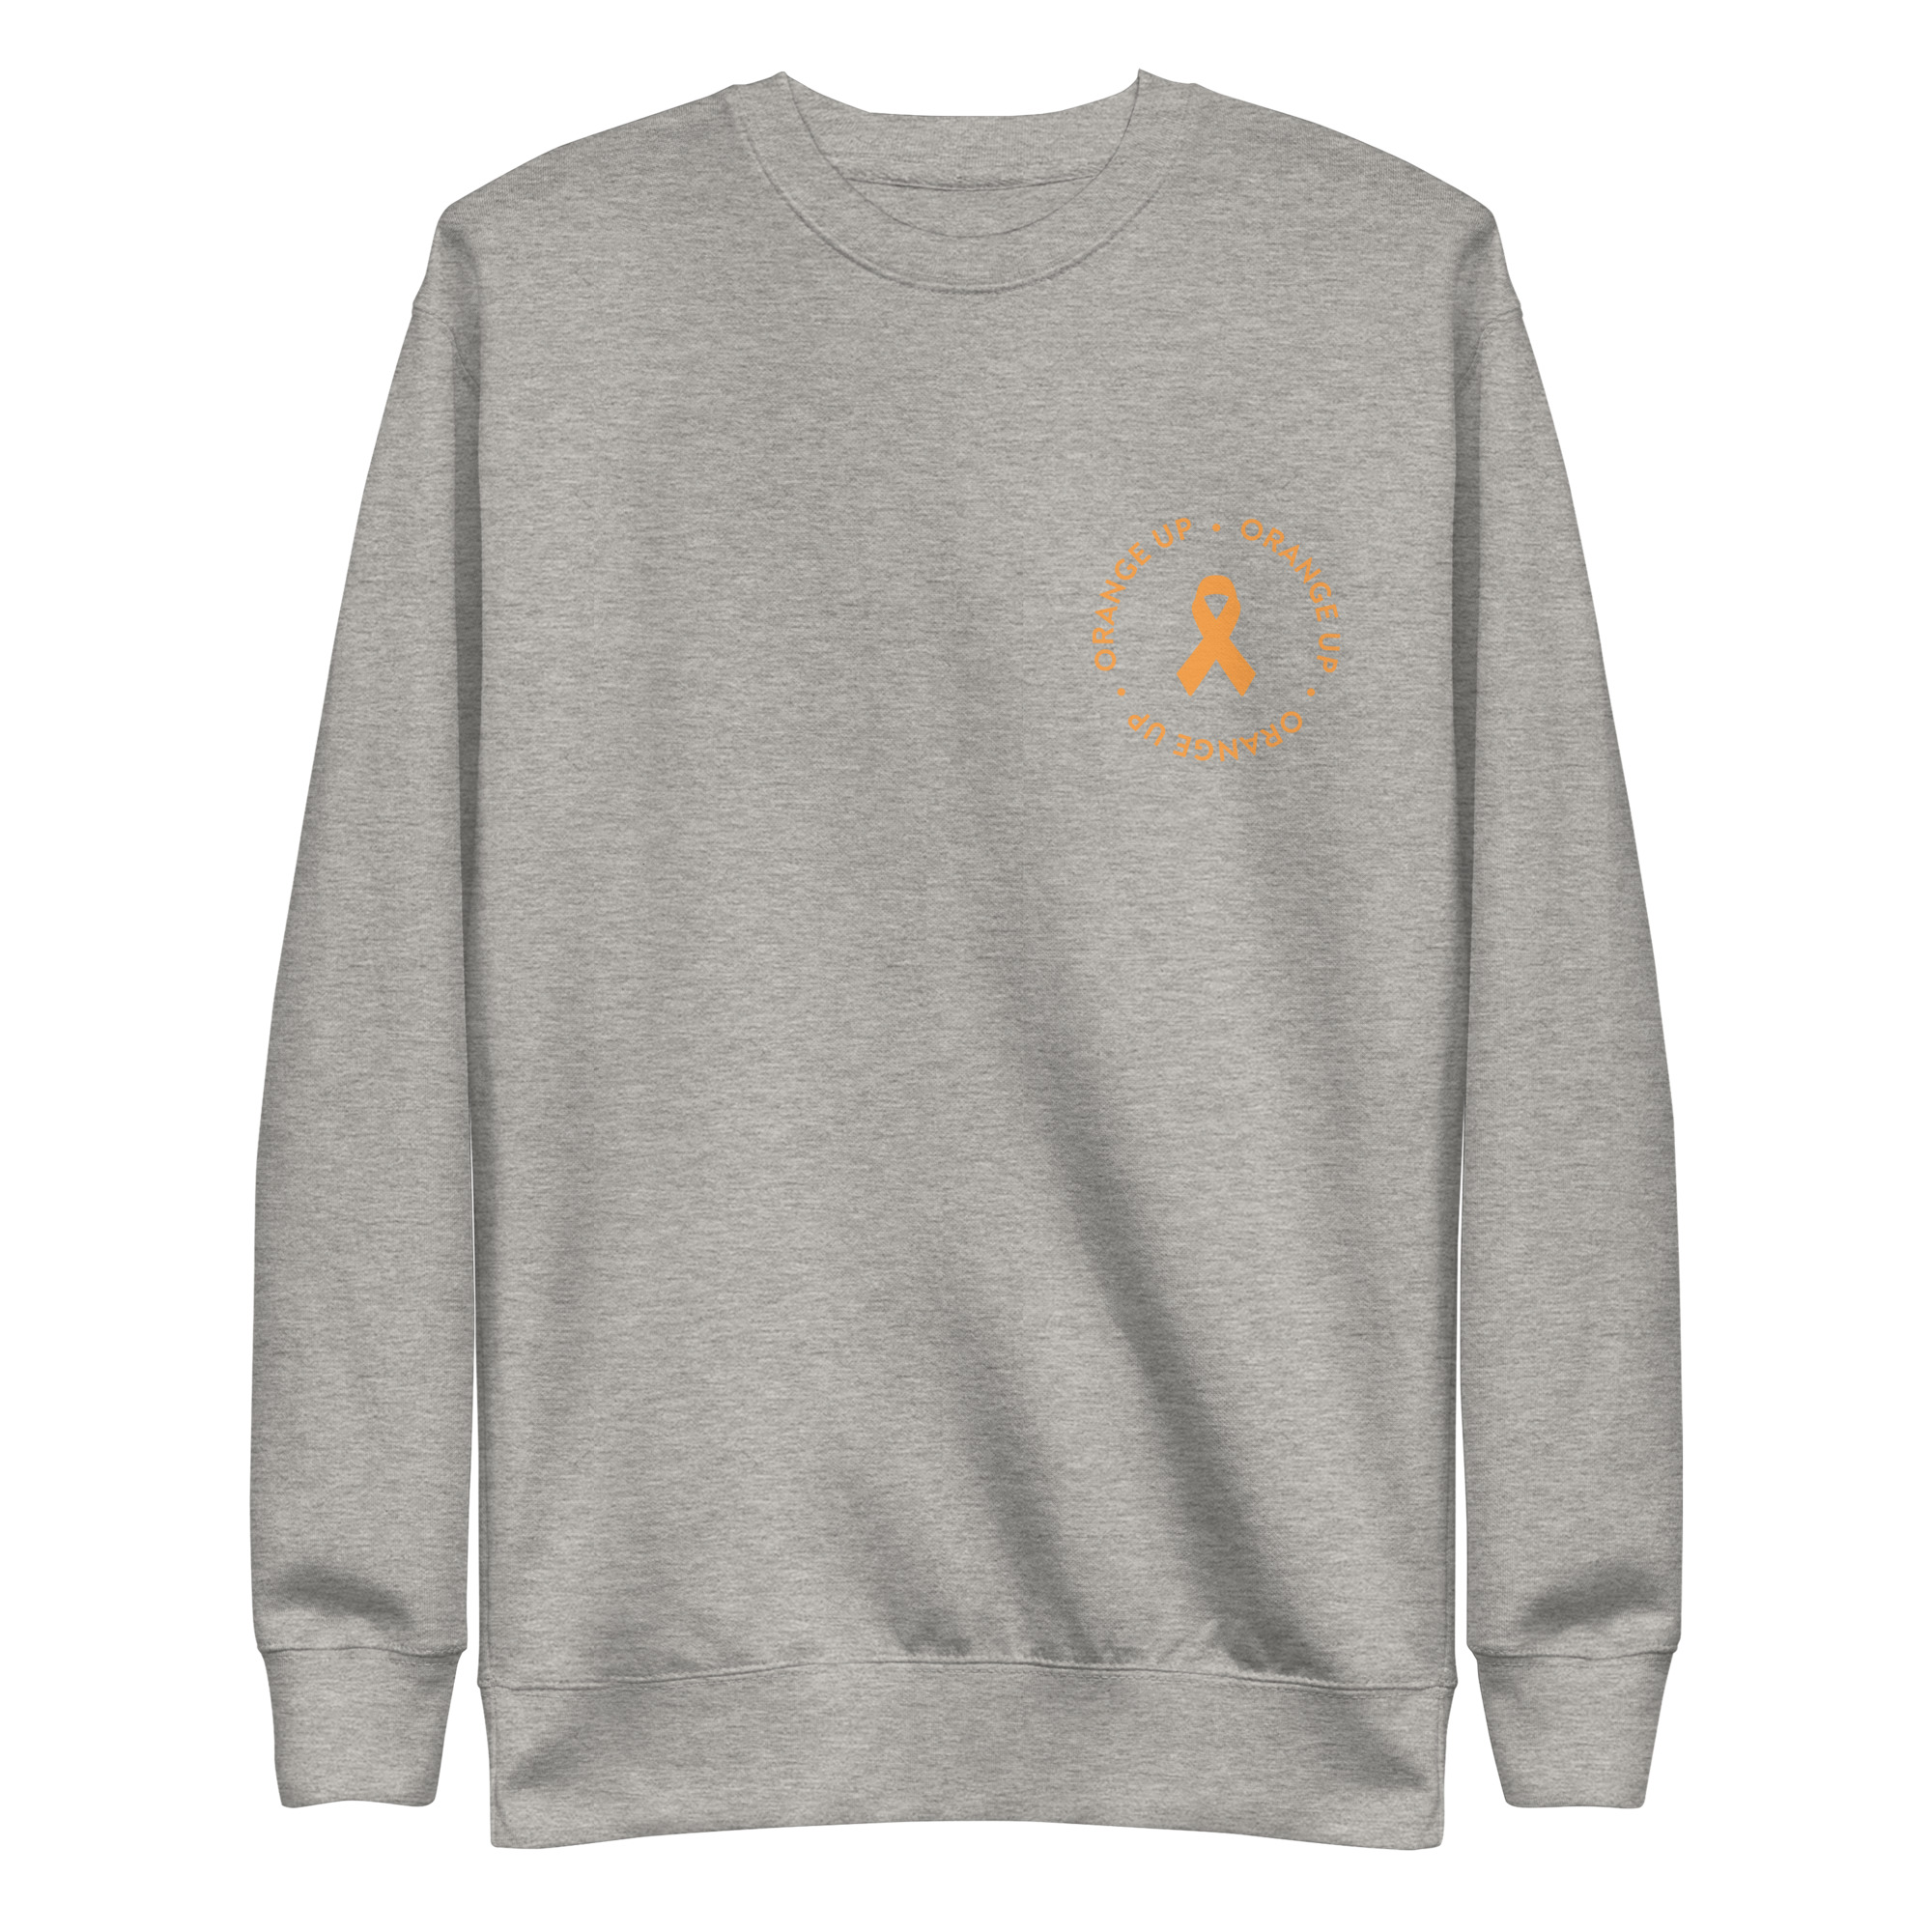 Orange Up! Sweatshirt Product